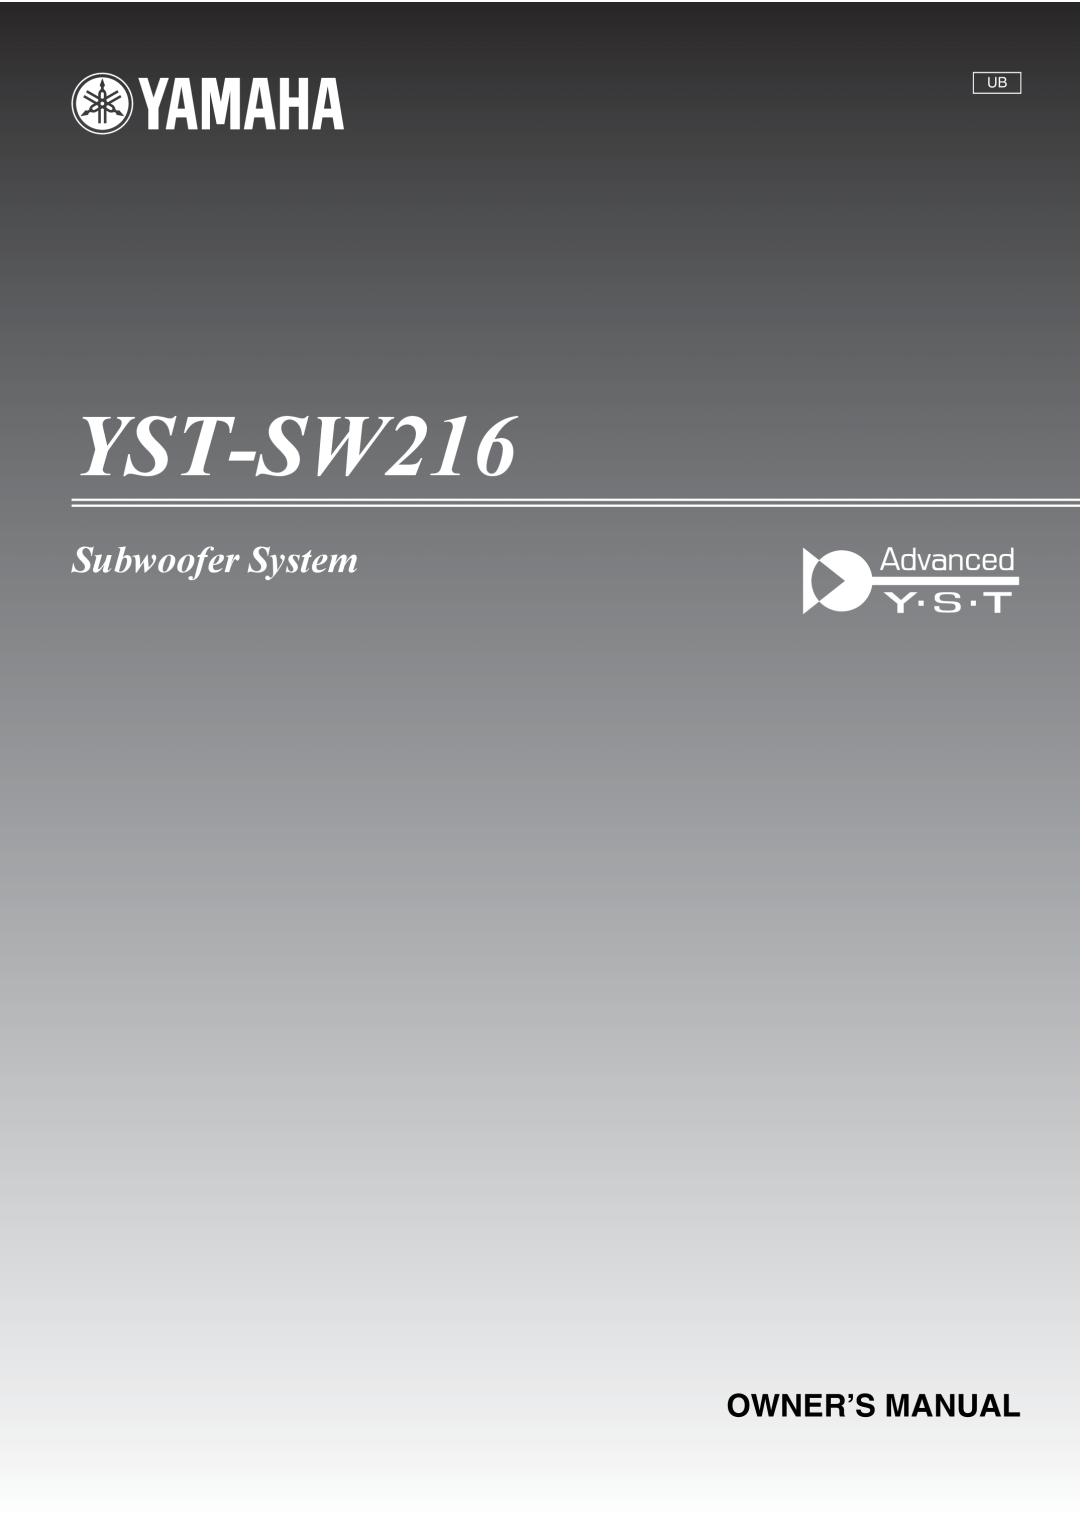 Yamaha YSTSW216BL owner manual YST-SW216, Subwoofer System 